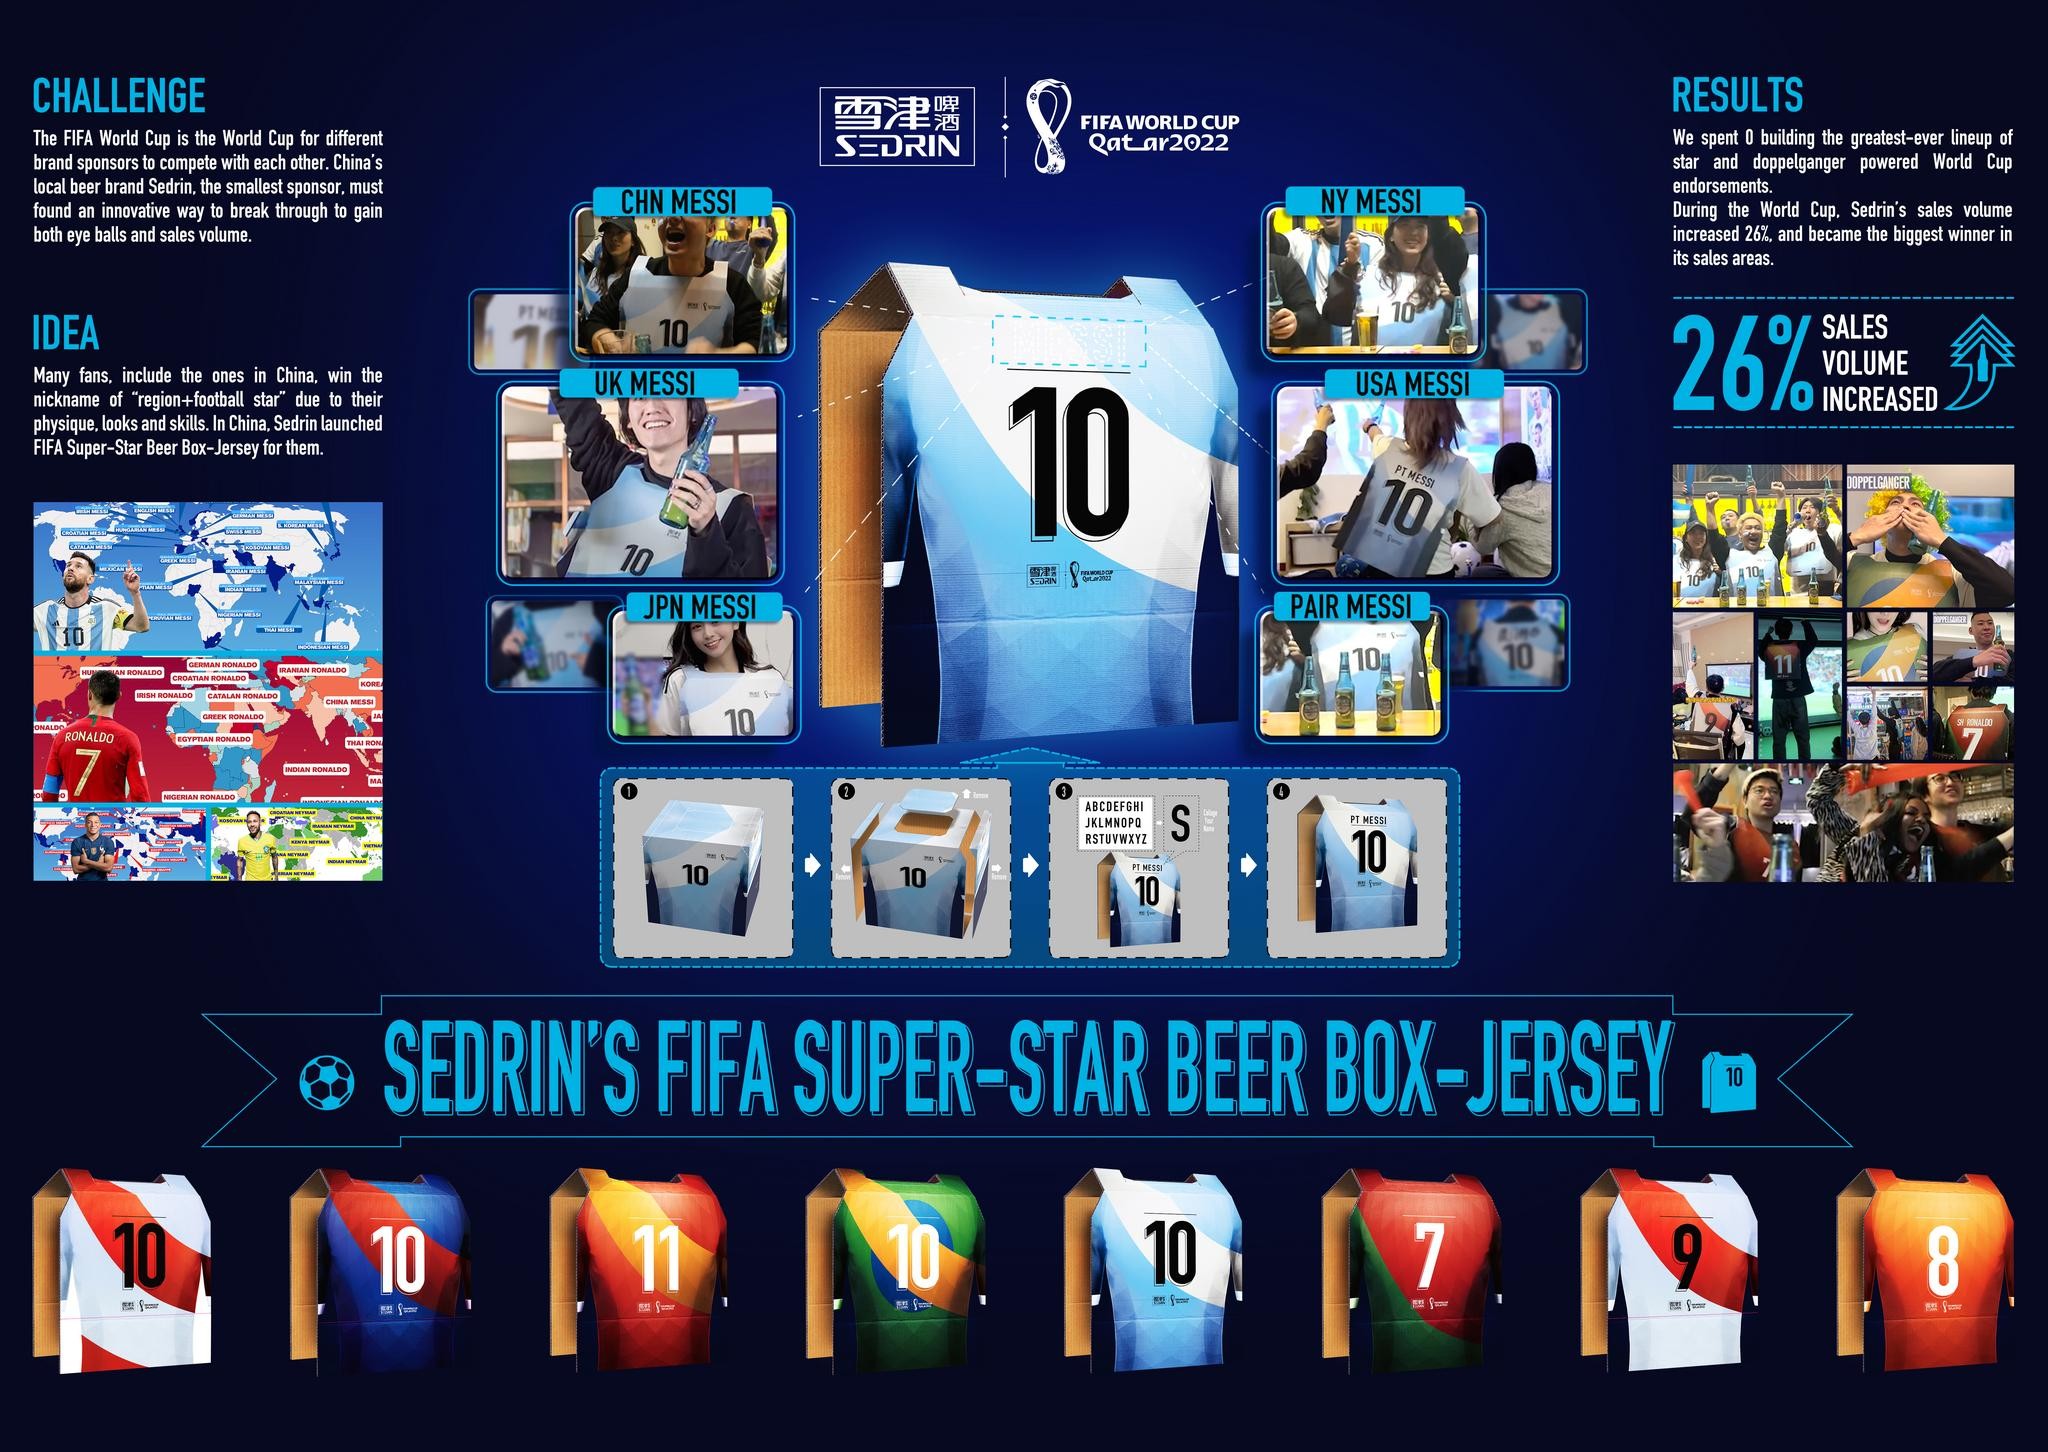 Sedrin’s FIFA Super-Star Beer Box-Jersey